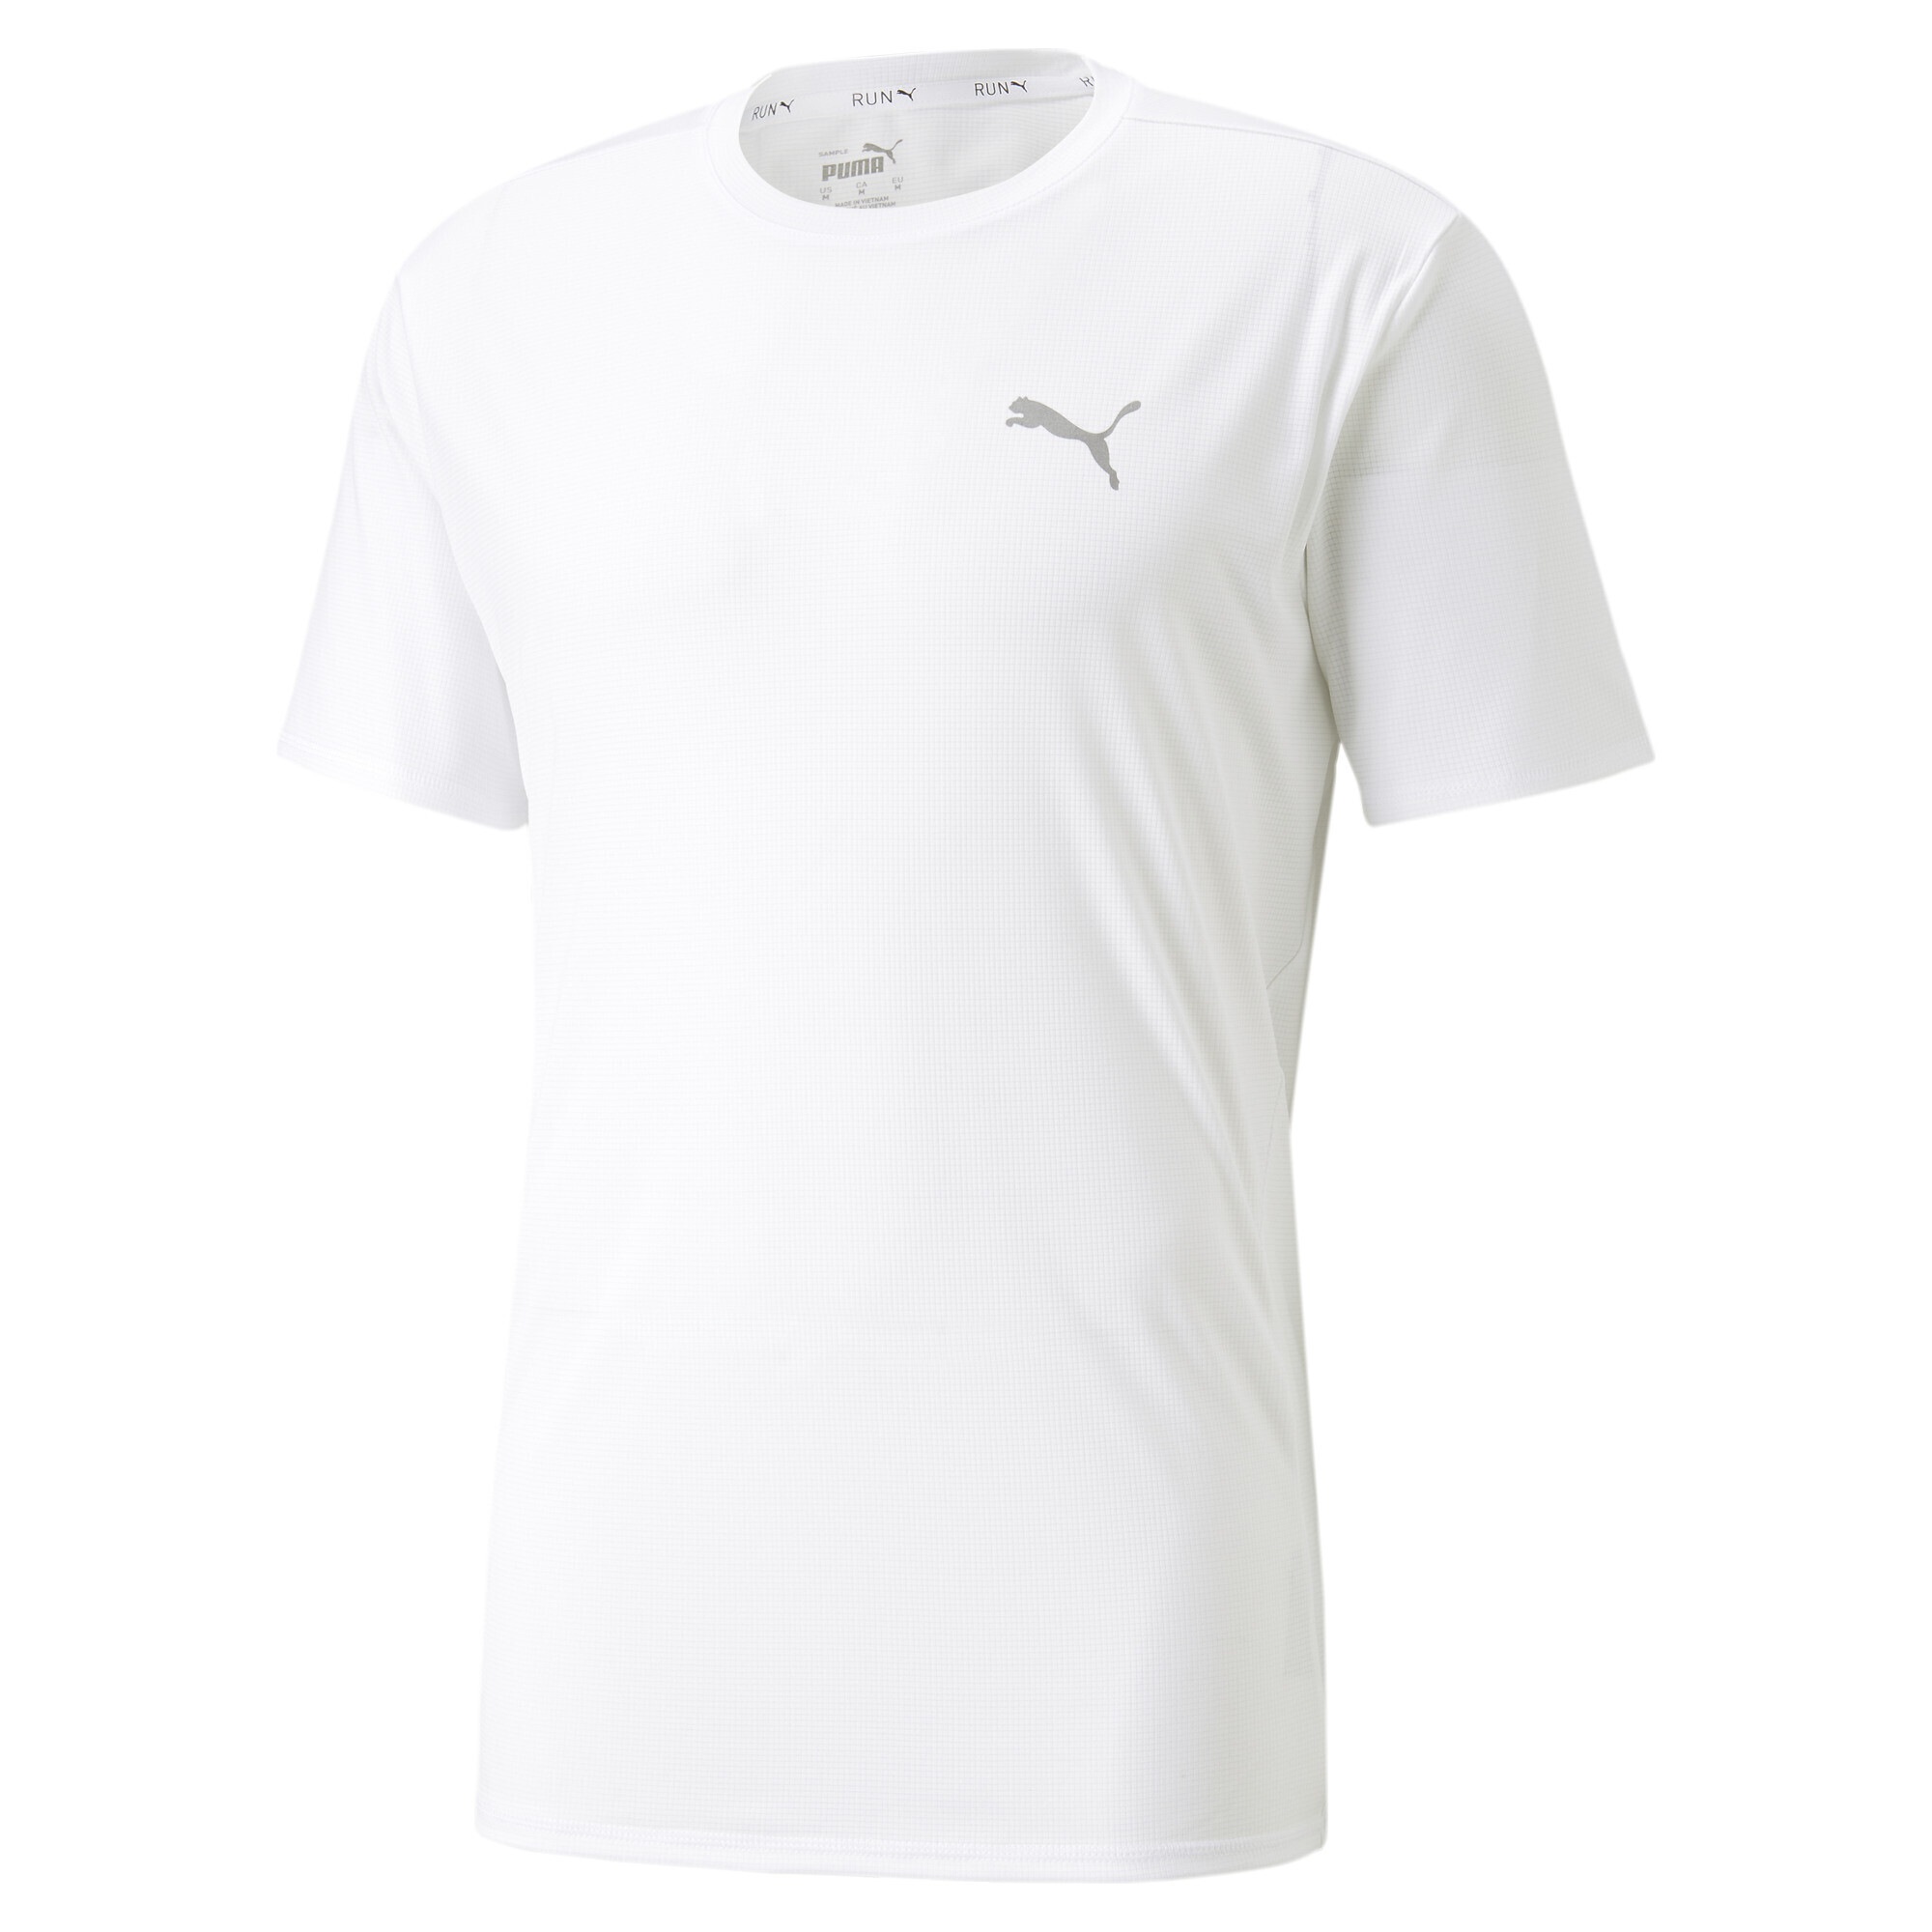 PUMA Laufshirt »RUN FAVOURITE Running Herren« kaufen T-Shirt online